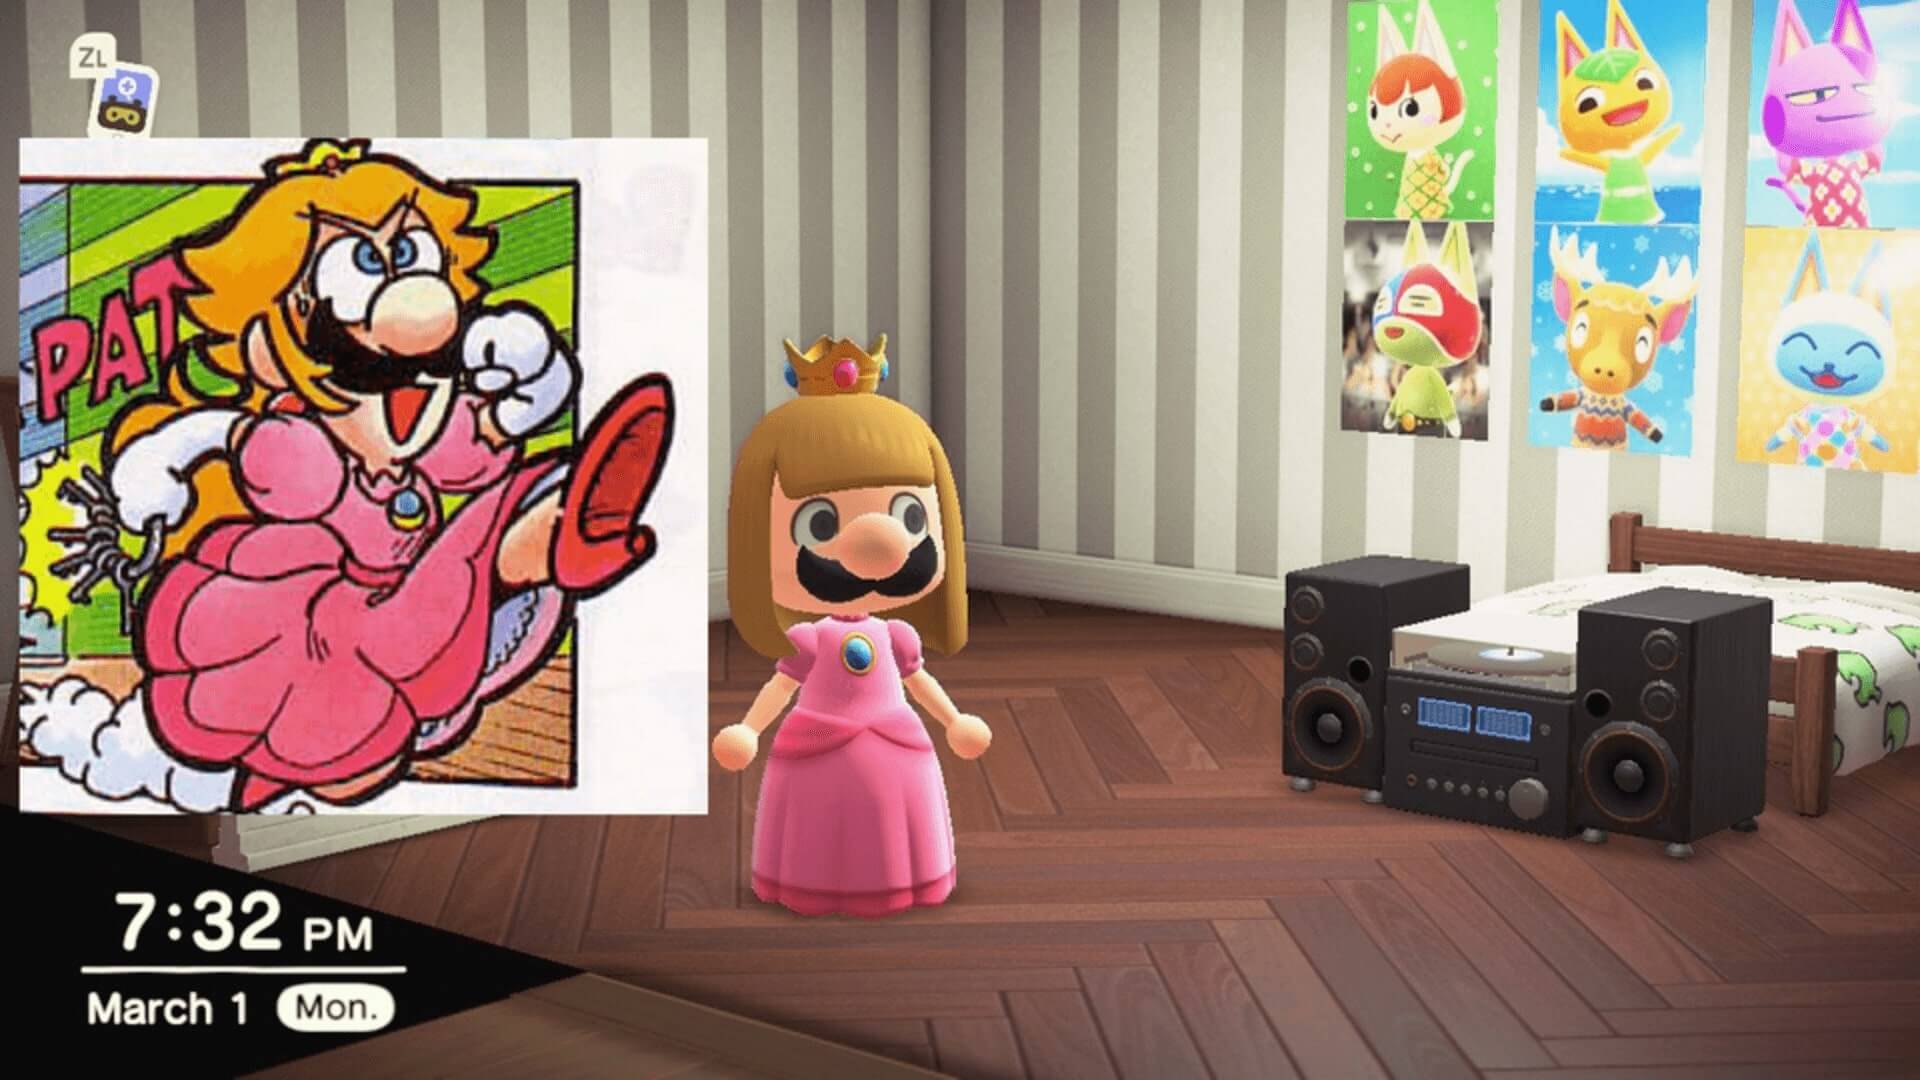 An Animal Crossing villager dressed as Luigi disguised as Peach.